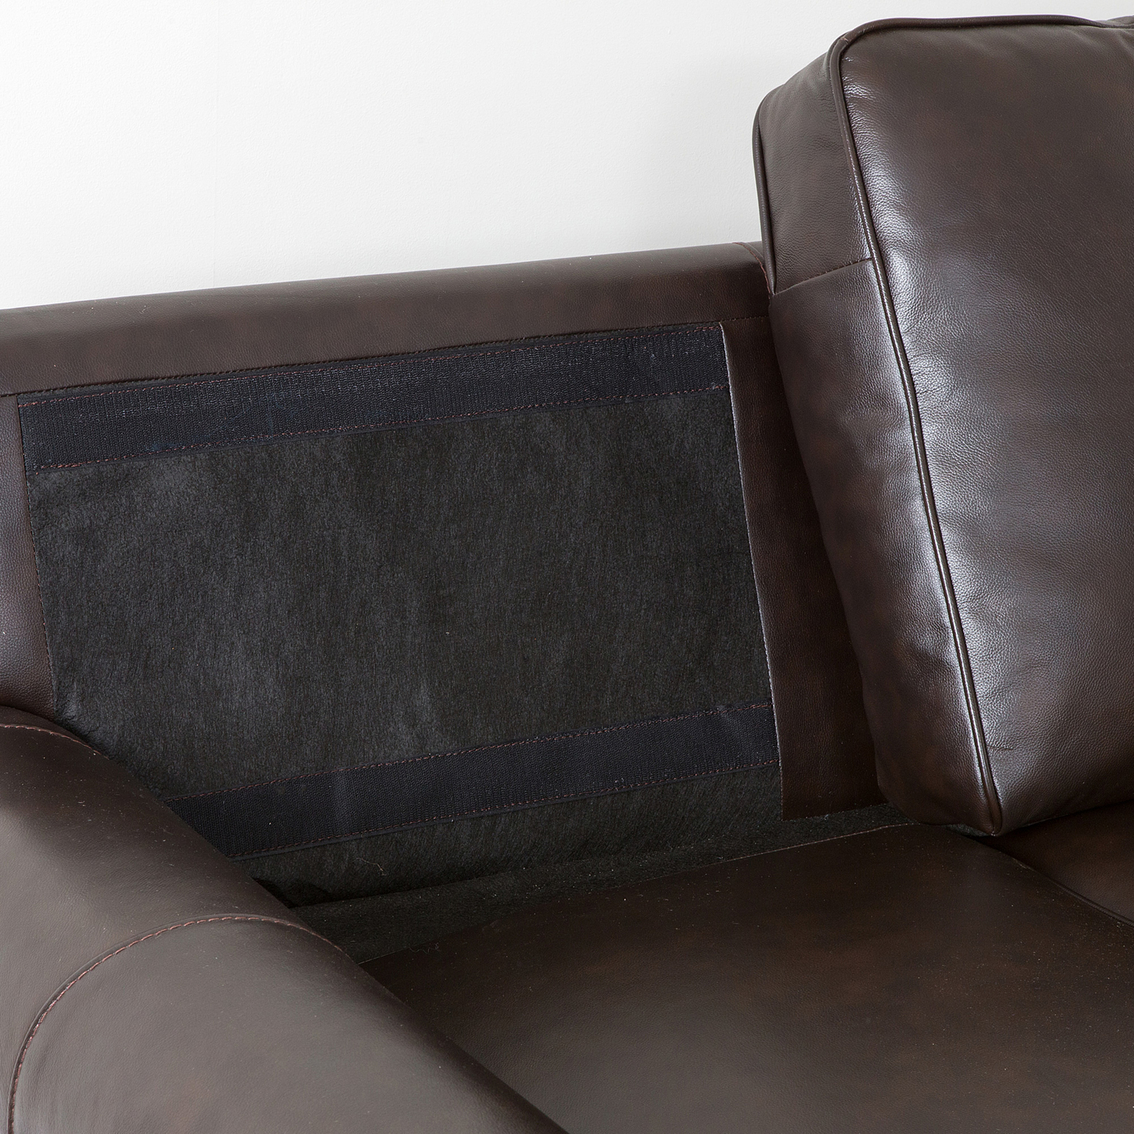 Abbyson Bellagio Leather Sofa | Sofas & Couches | Furniture ...